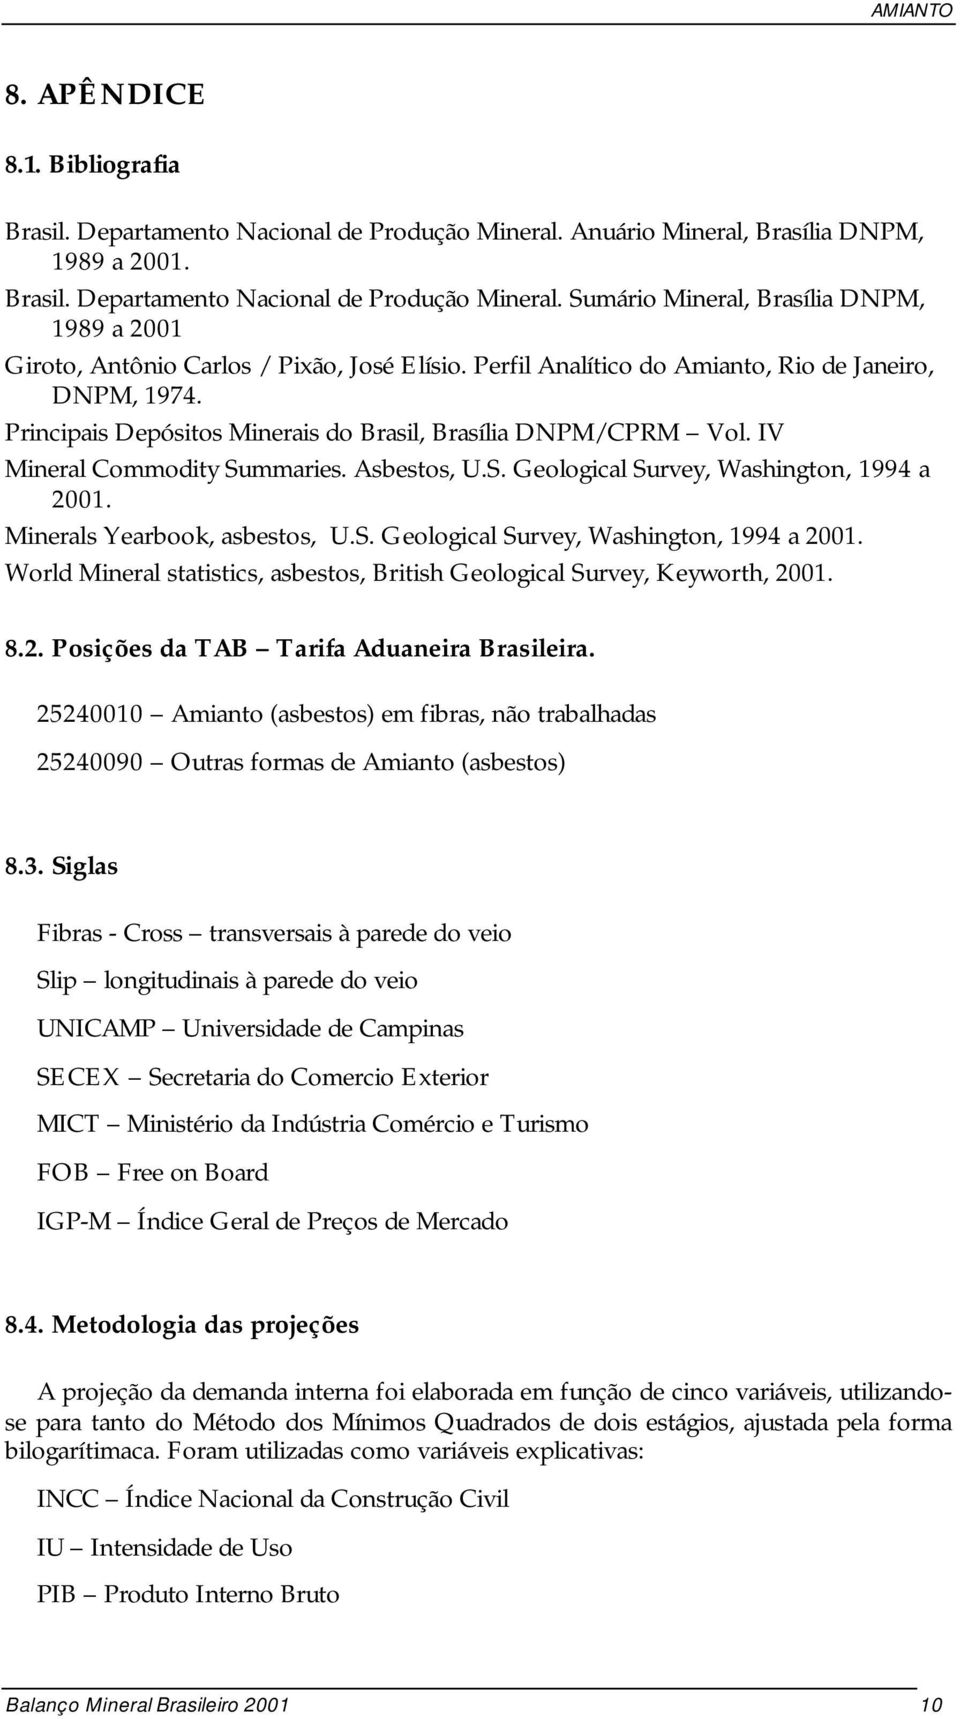 Minerals Yearbook, asbestos, U.S. Geological Survey, Washington, 1994 a 2001. World Mineral statistics, asbestos, British Geological Survey, Keyworth, 2001. 8.2. Posições da TAB Tarifa Aduaneira Brasileira.